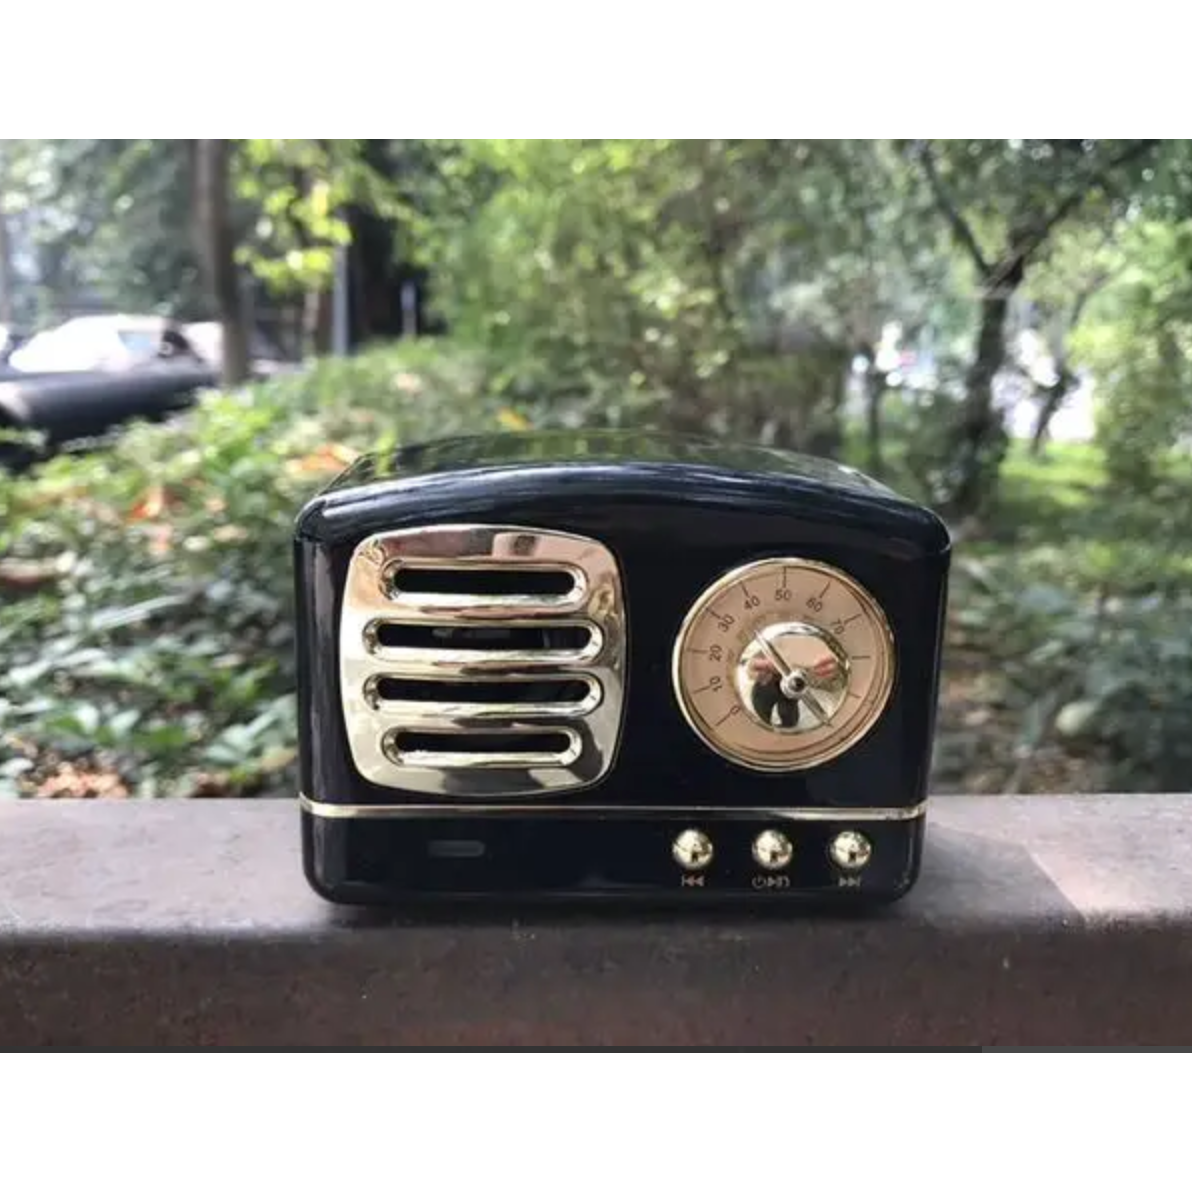 Antique Style Bluetooth Speaker - Black